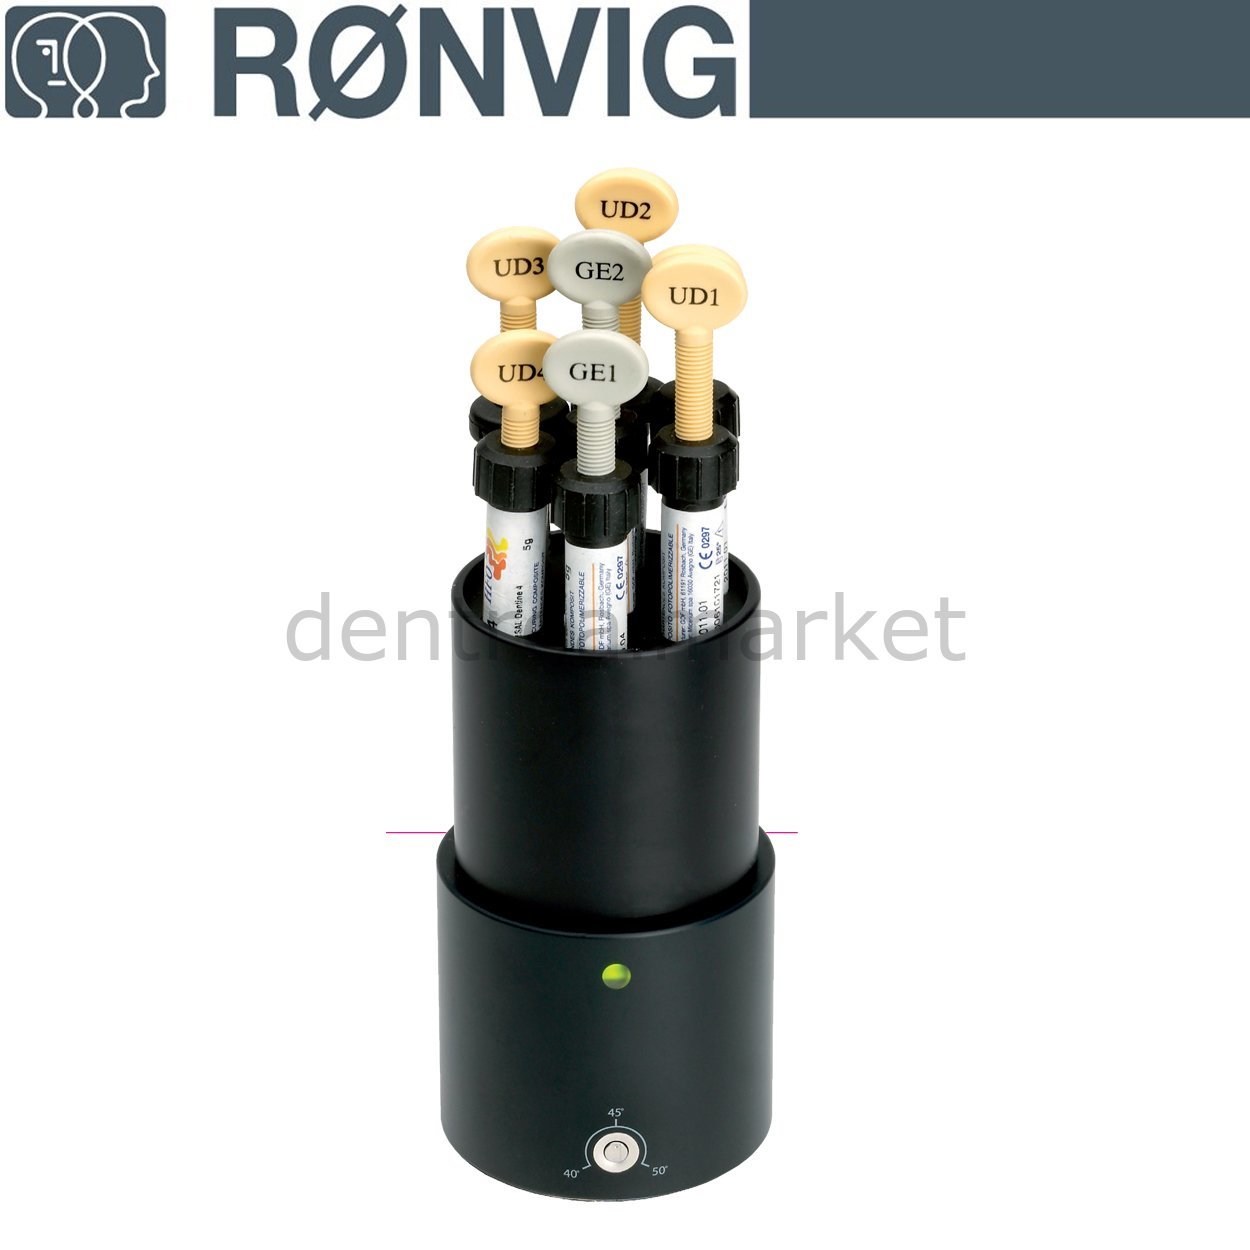 DentrealStore - Ronvig Ease-It Composite Heater - Dental Composite Heater